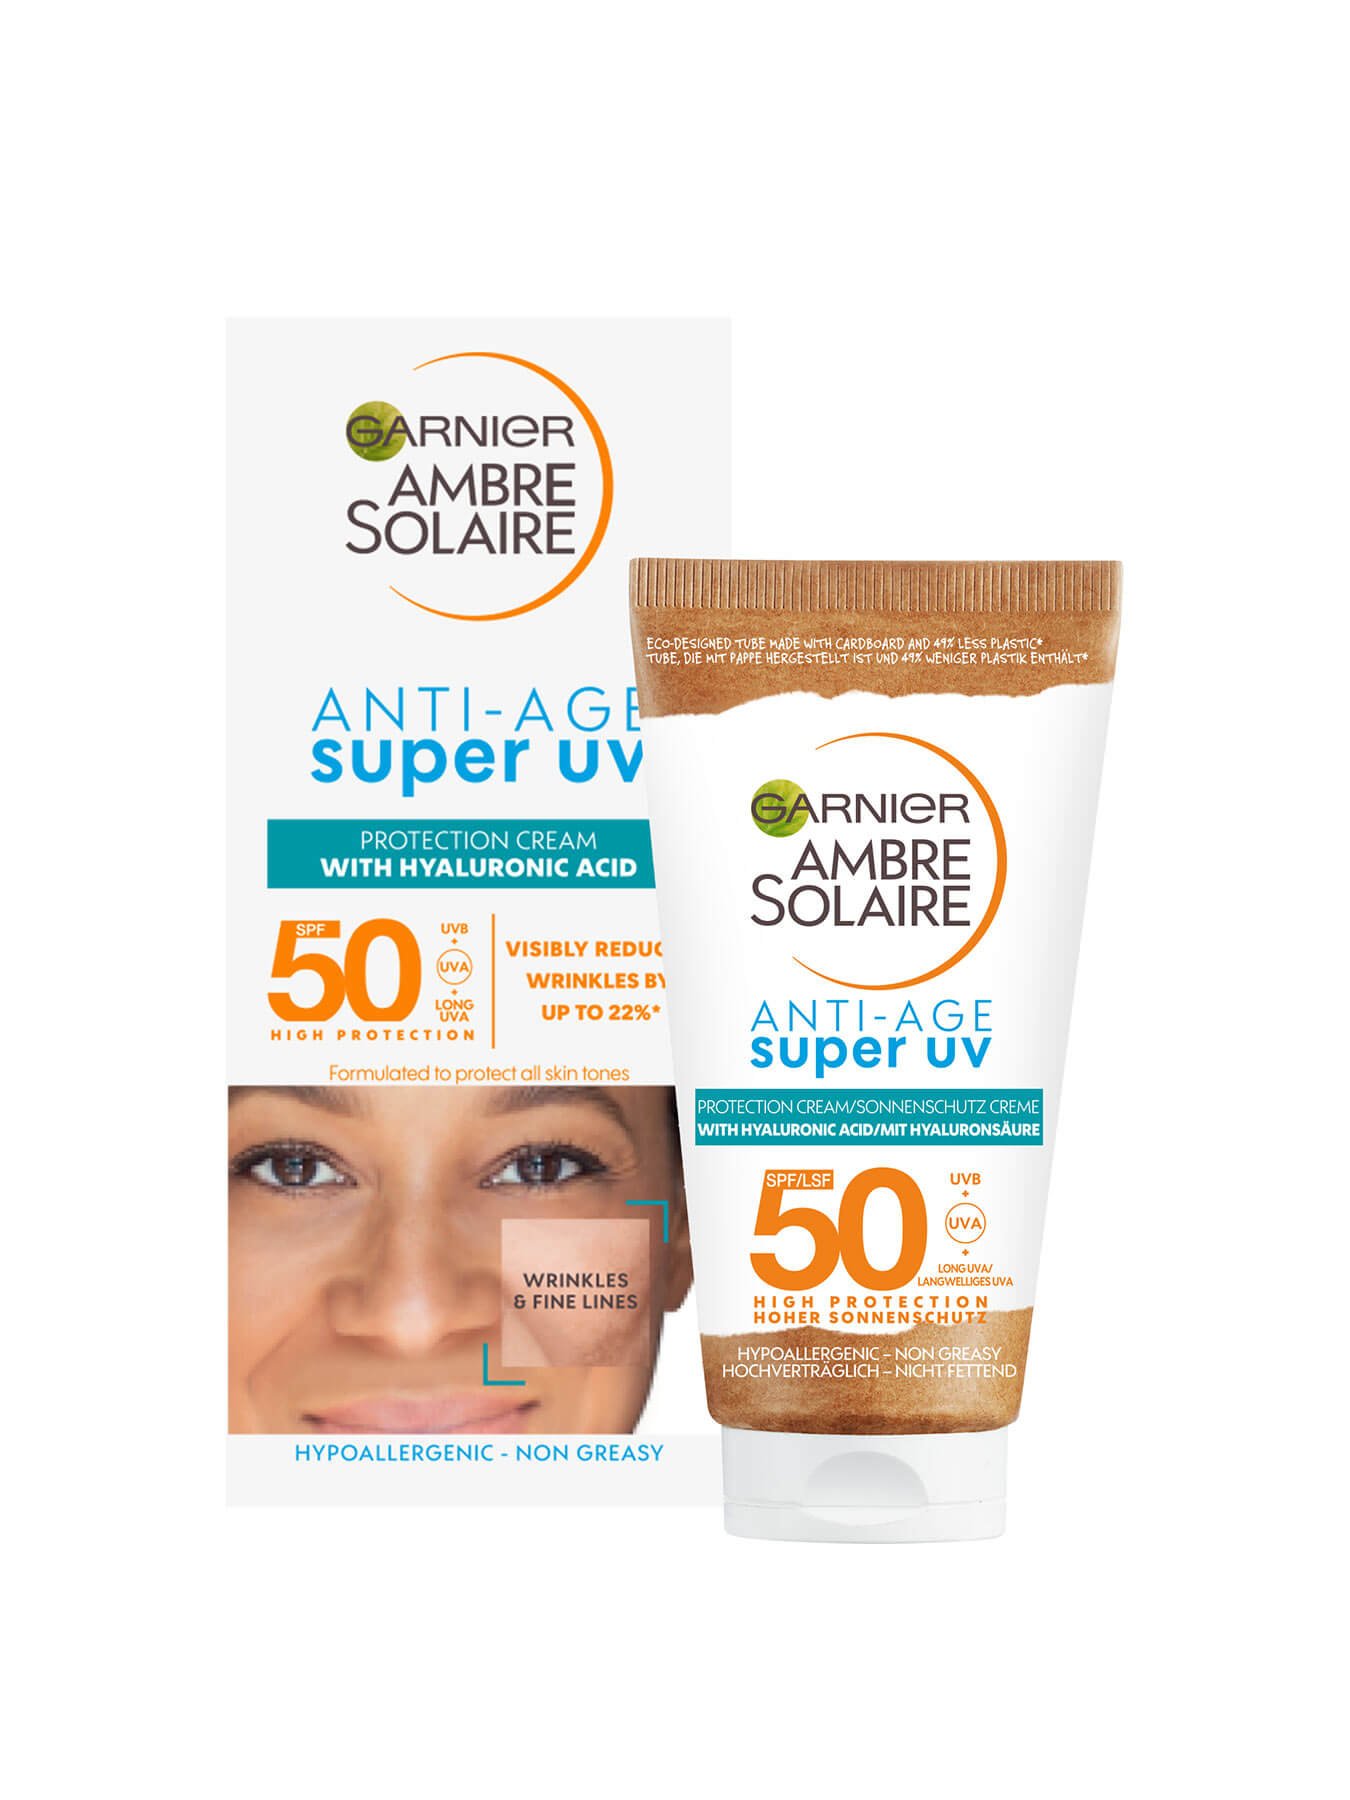 Ambre Solaire Super UV Anti Age Packshot and box